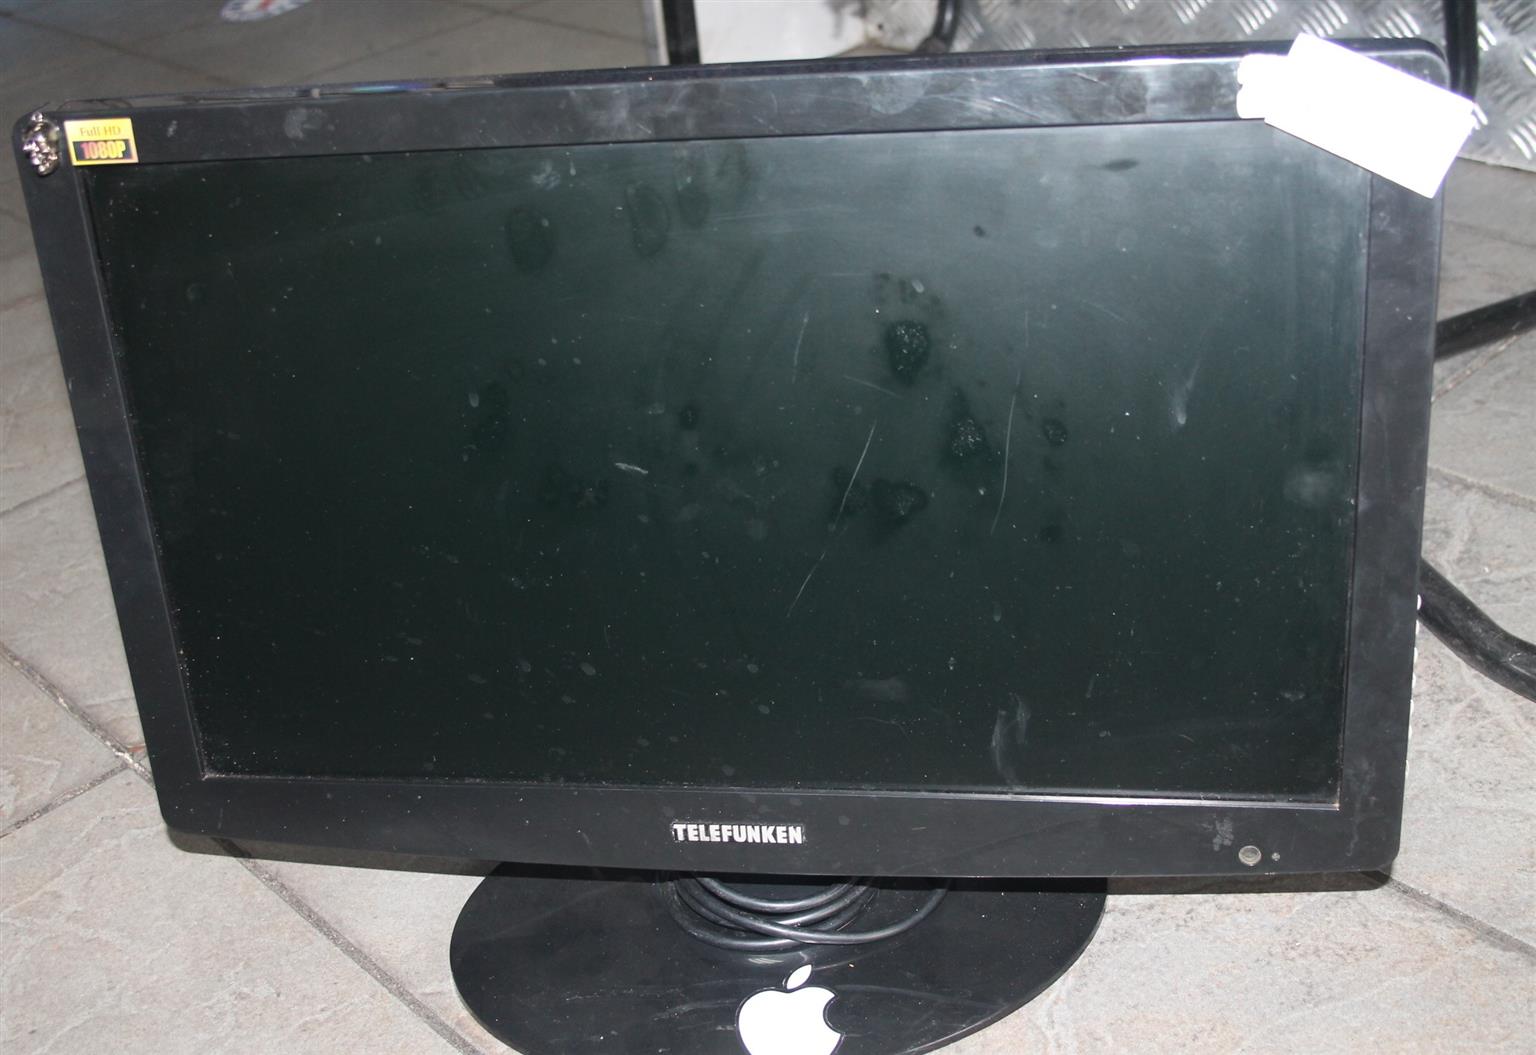 Telefunken 22 inch lcd tv with remote S046929A #Rosettenvillepawnshop